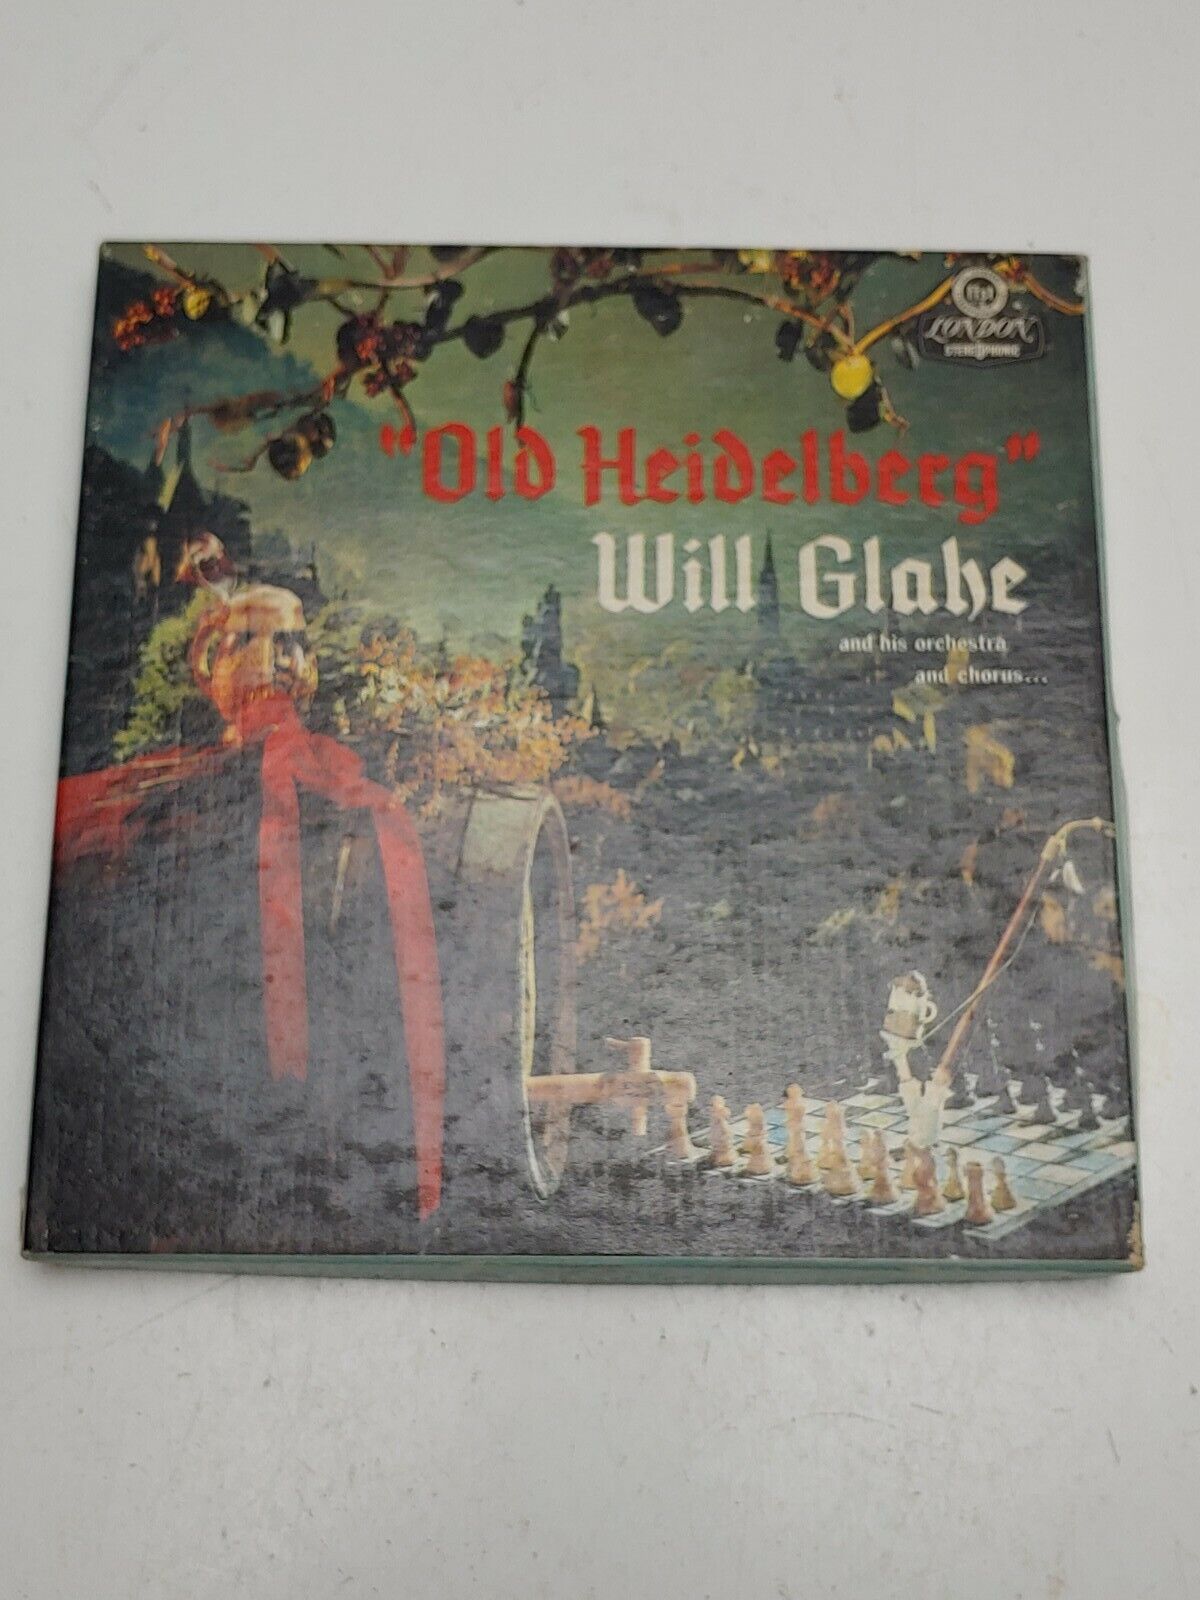 OLD HEIDELBERG WILL GLAHE The Polka King London Stereophonic LPM-70017 Reel Tape